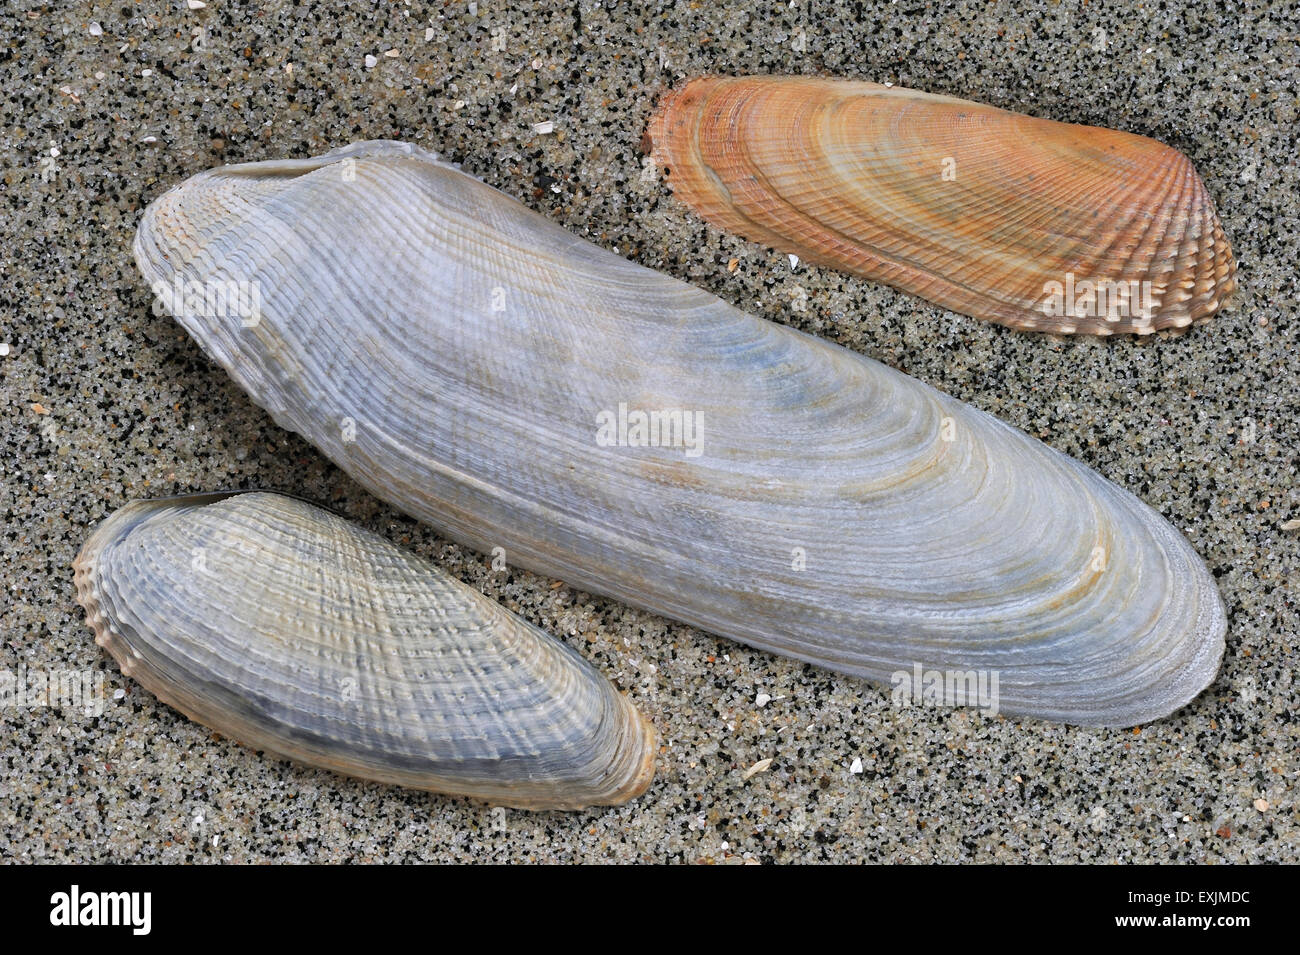 Common piddock (Pholas dactylus), American piddock (Petricola pholadiformis) and White piddock (Barnea candida) shells on beach Stock Photo